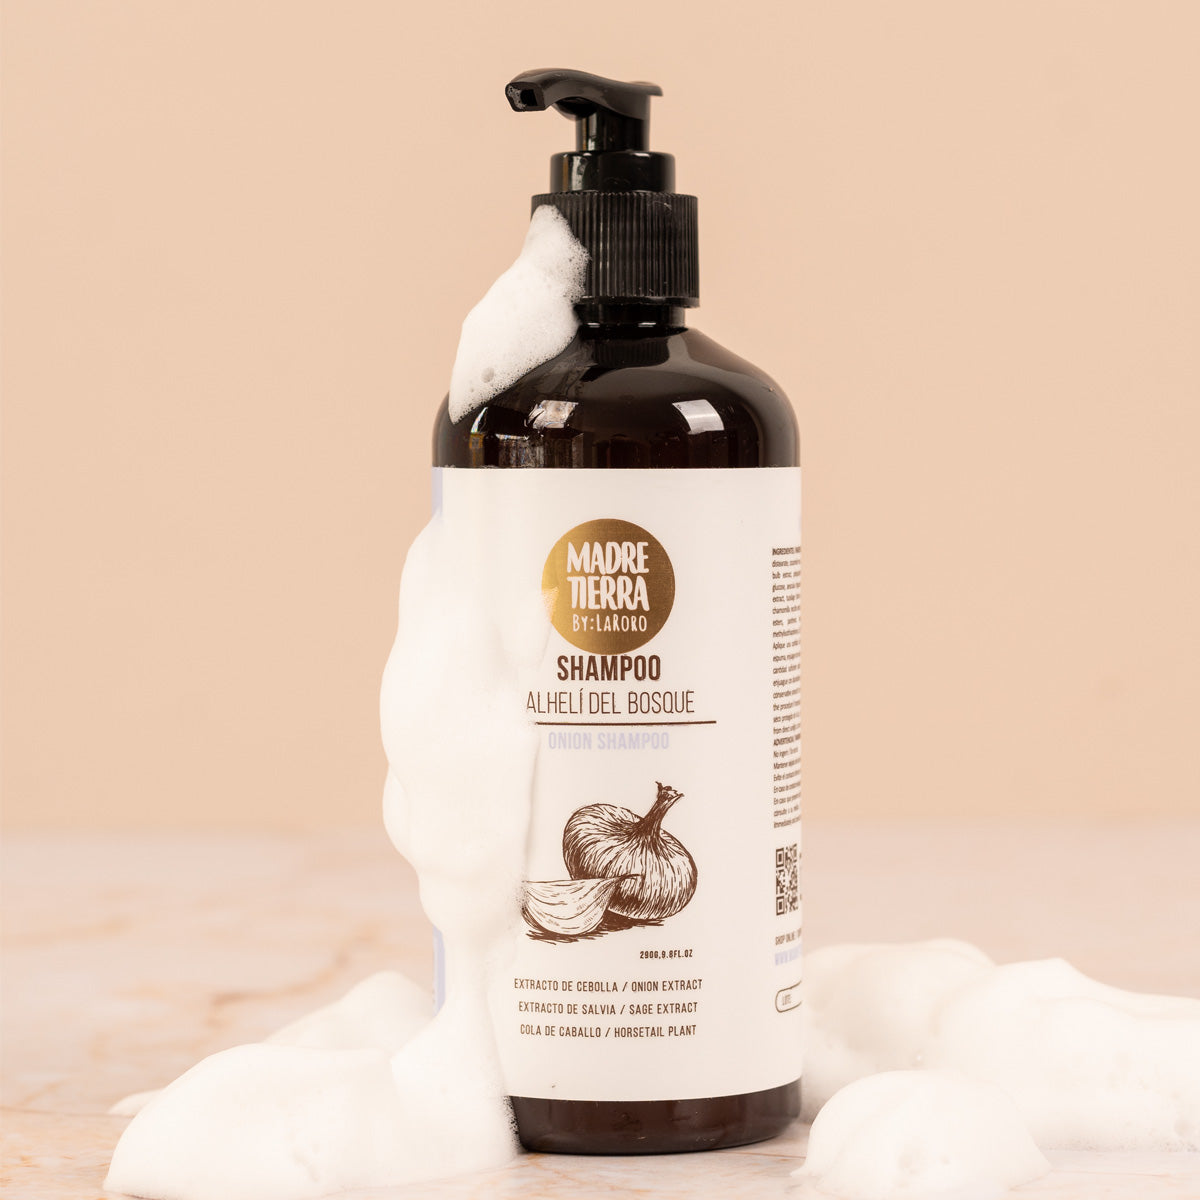 Shampoo Alhelí del Bosque + Tratamiento Melena Imparable